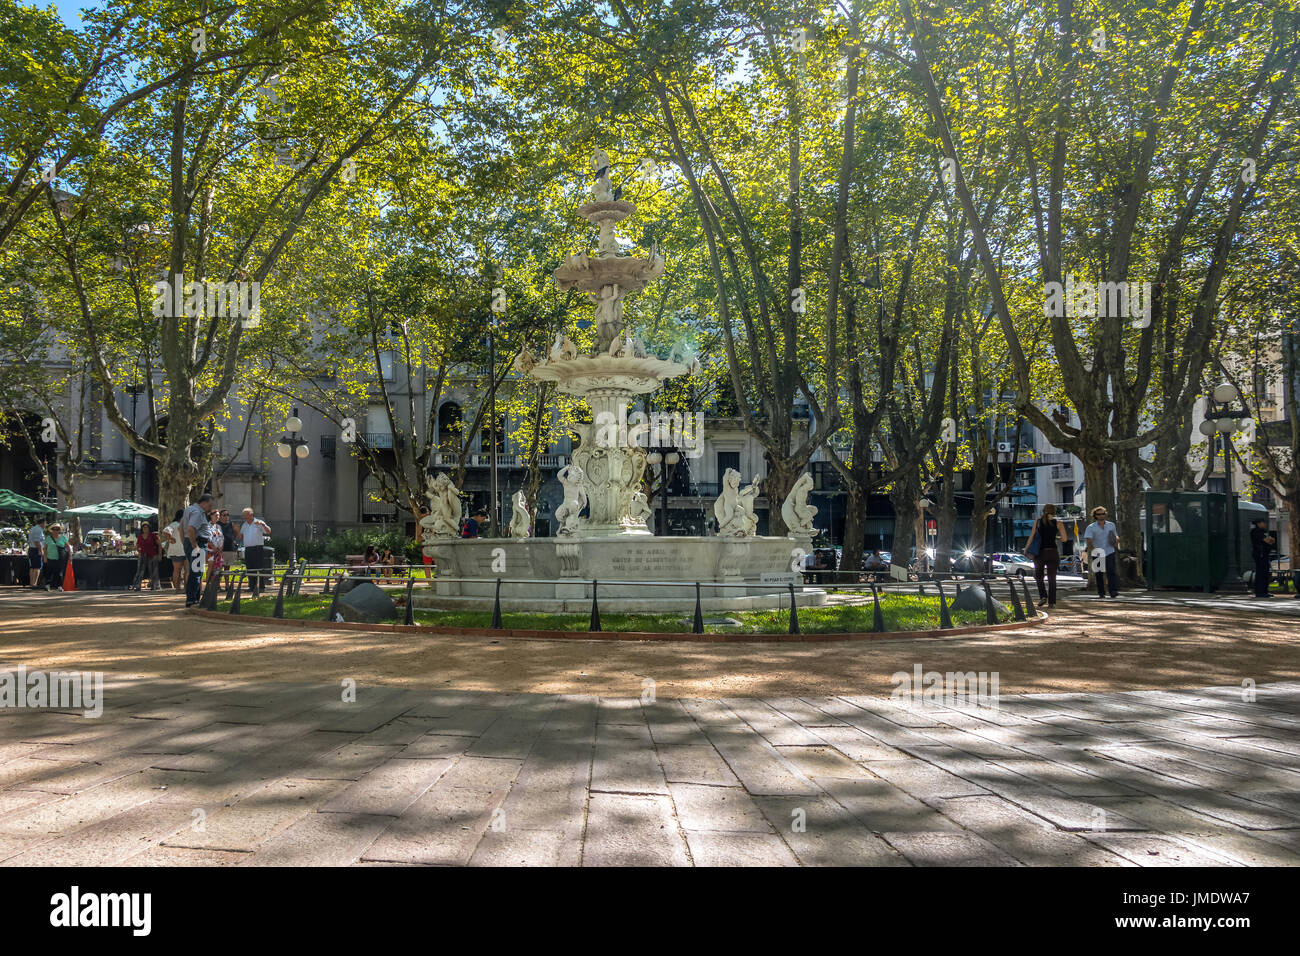 Plaza Matriz or Plaza Constitucion (Constitution Square)  - Montevideo, Uruguay Stock Photo